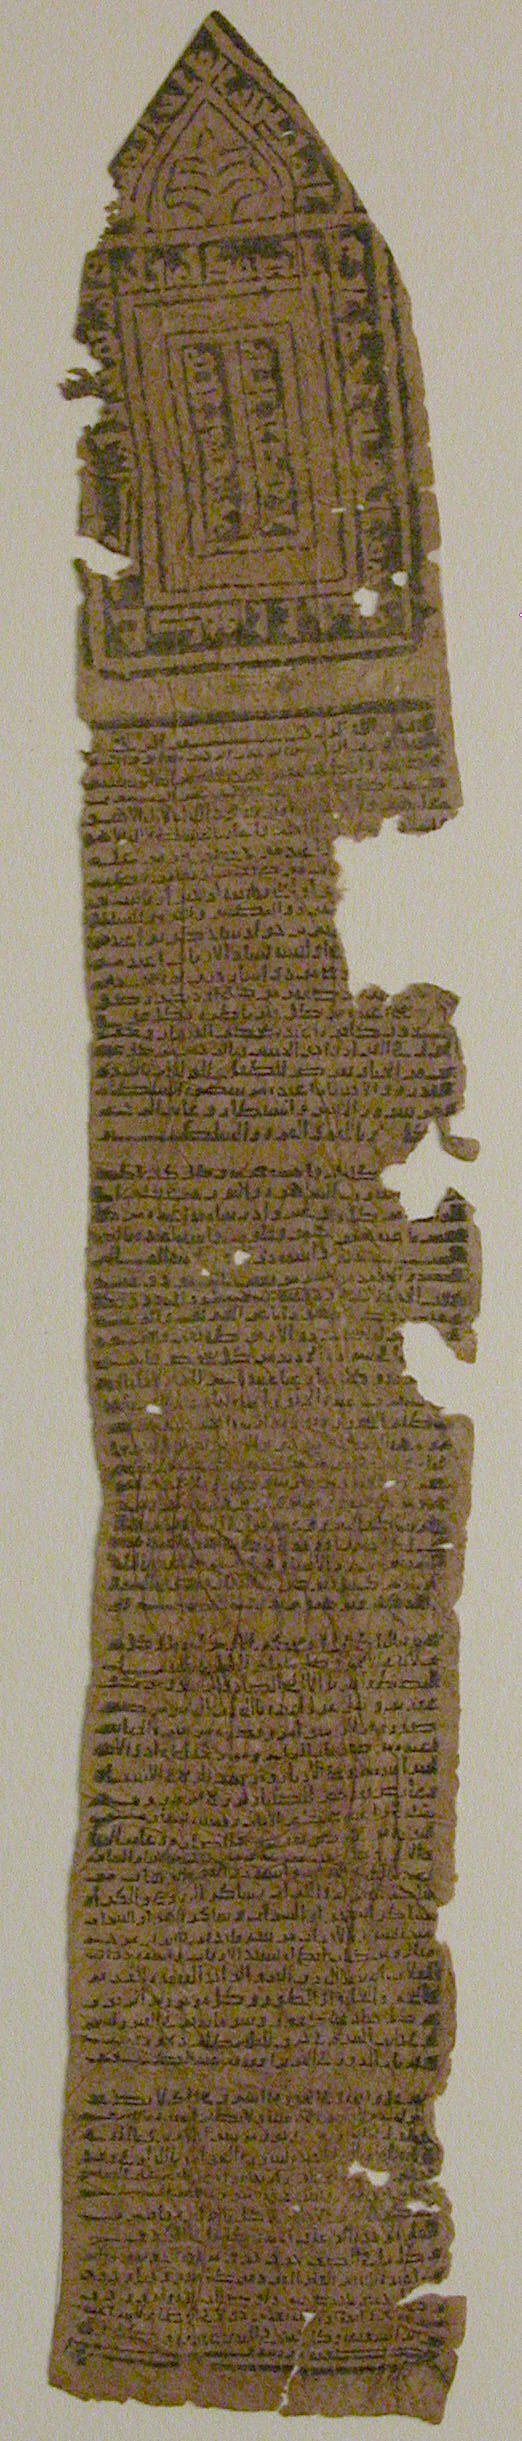 Talismanic Scroll | The Metropolitan Museum of Art